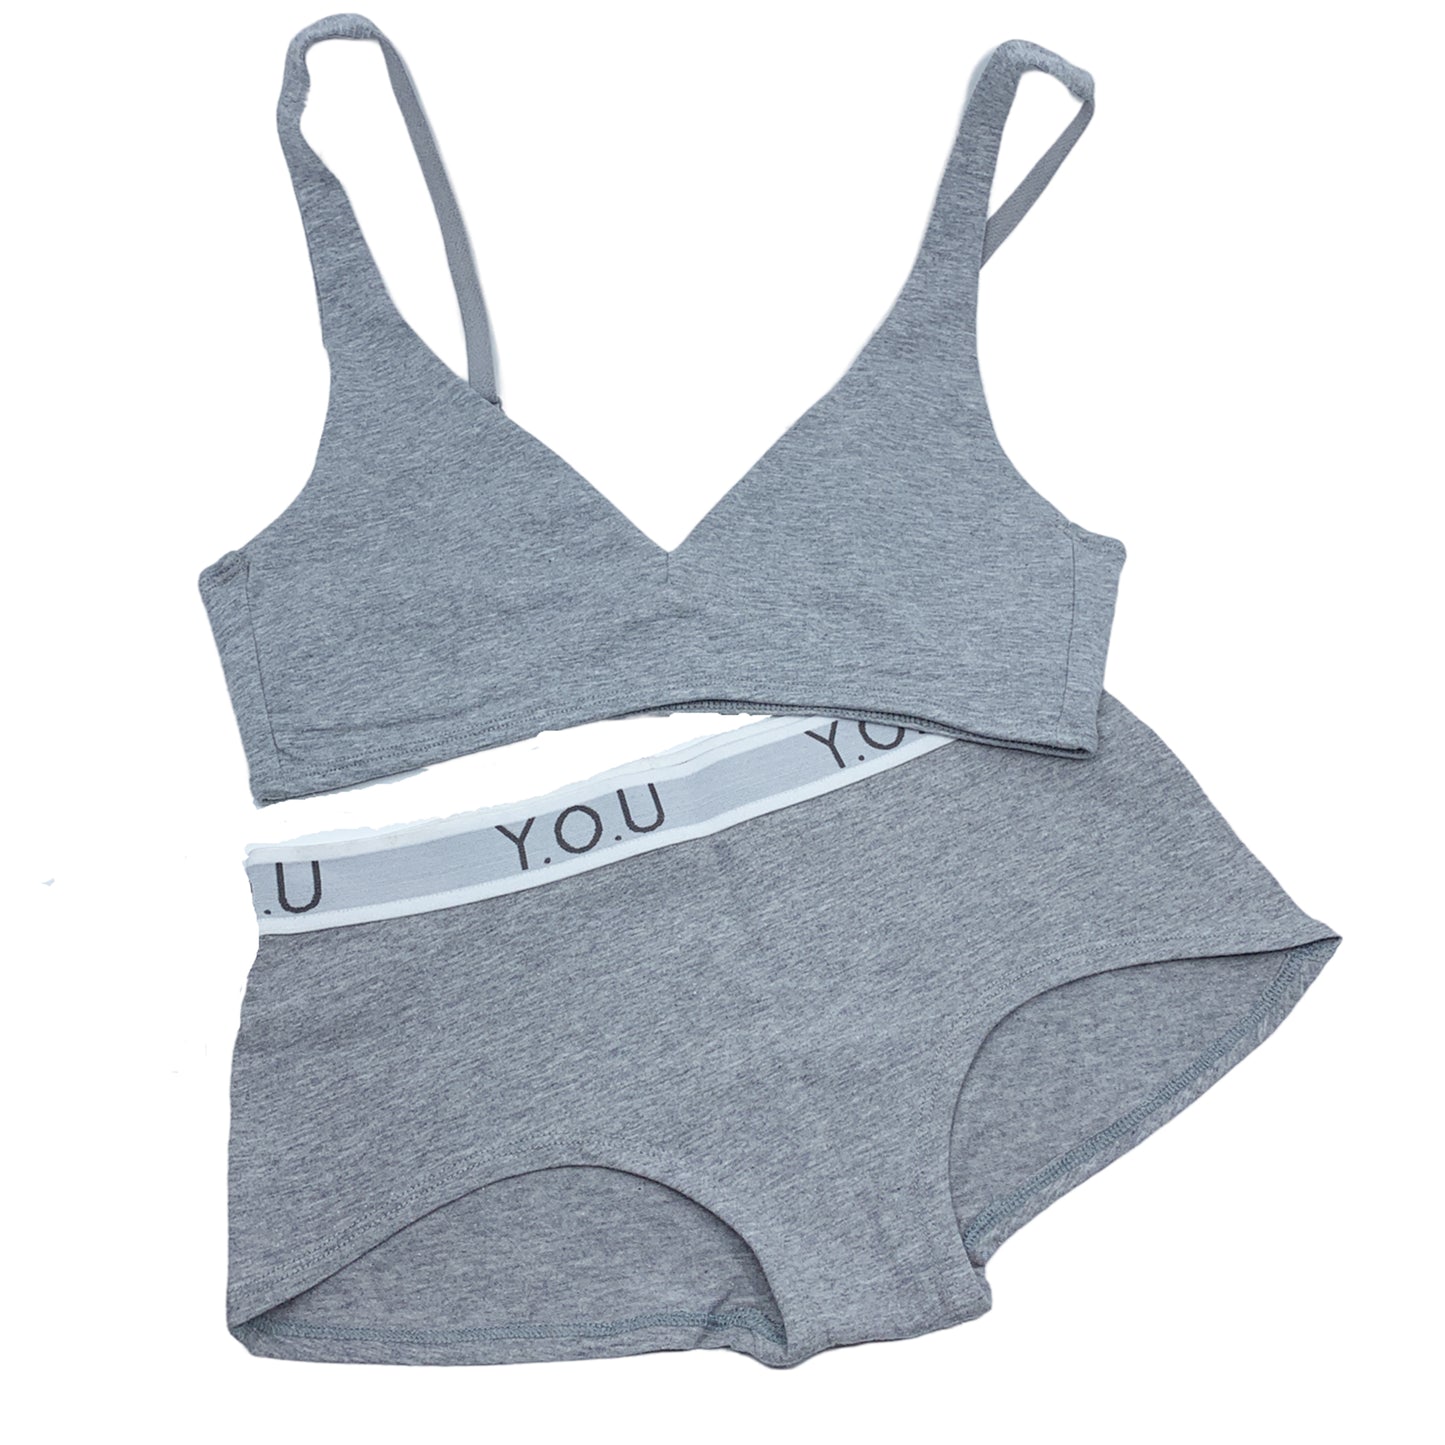 Women's organic cotton matching bralette and Y.O.U boy shorts set - light grey (heather grey)